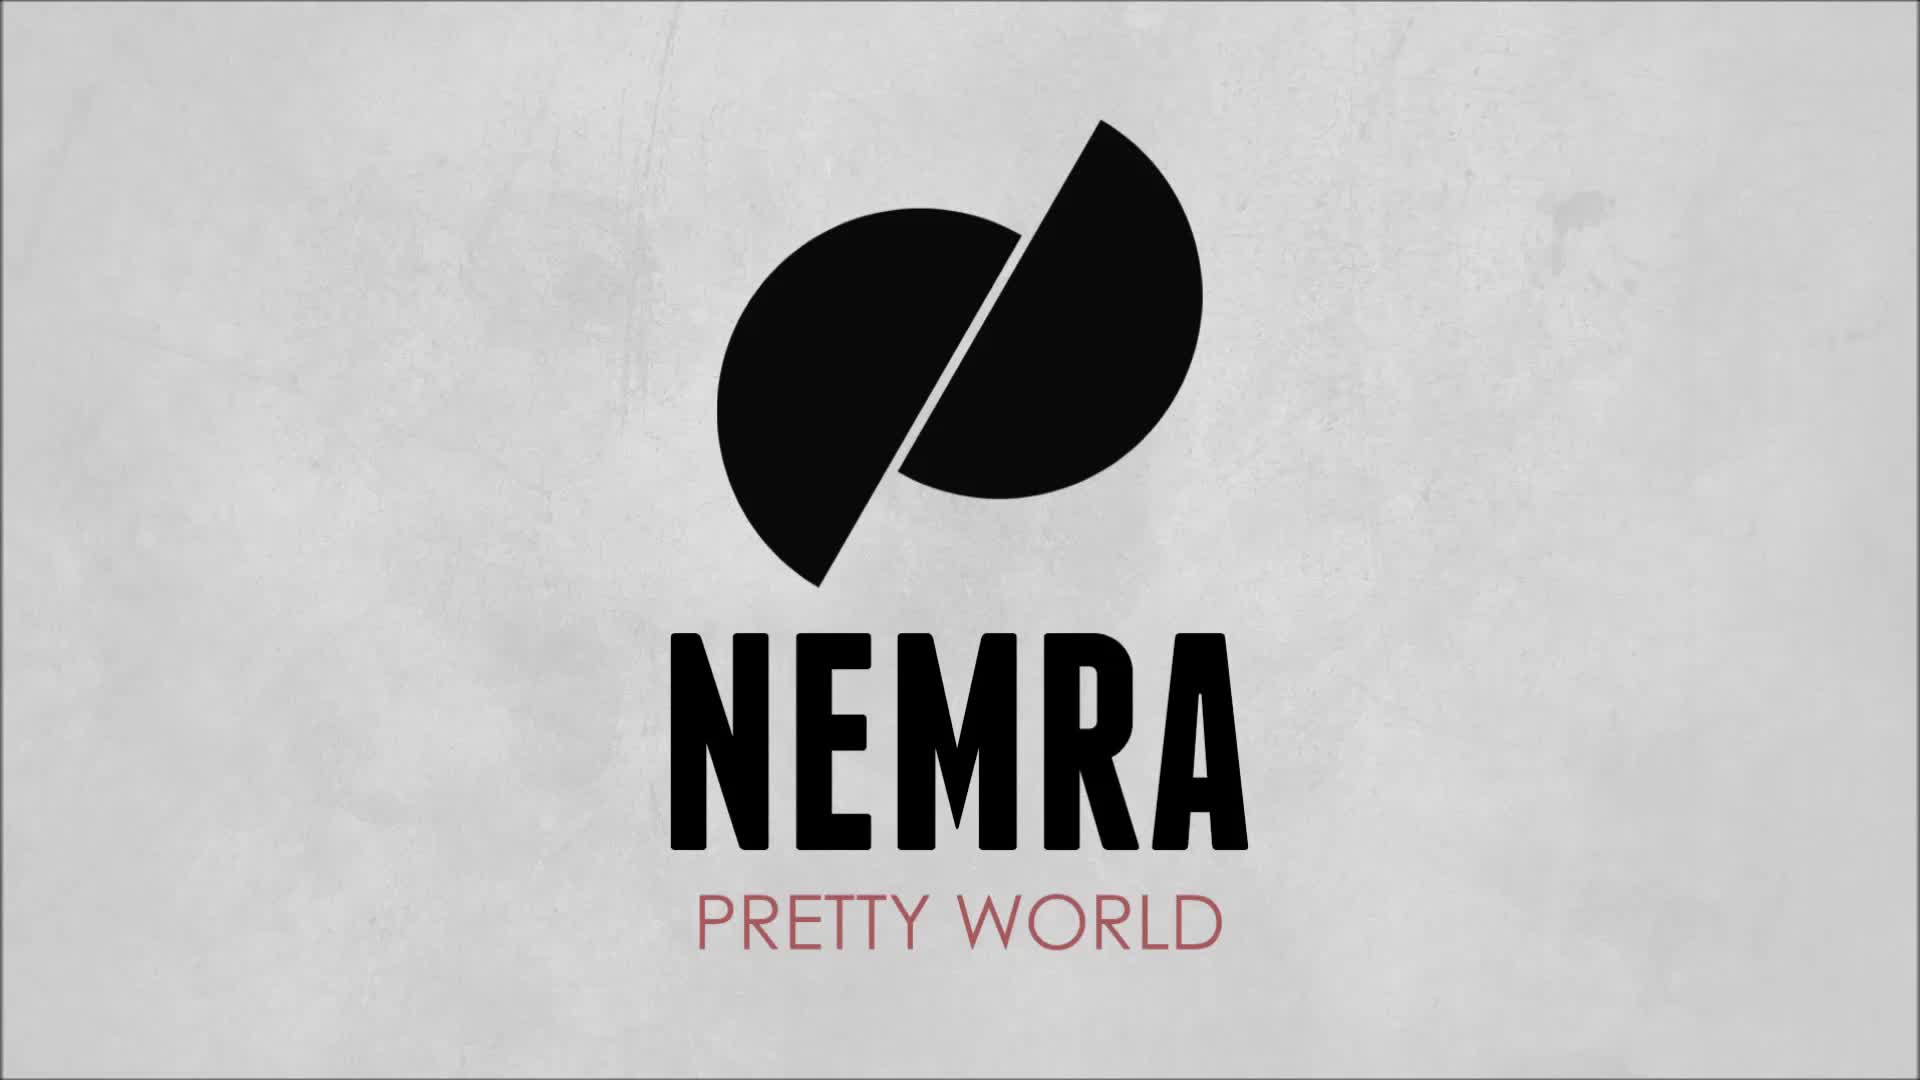 Nemra - Pretty world